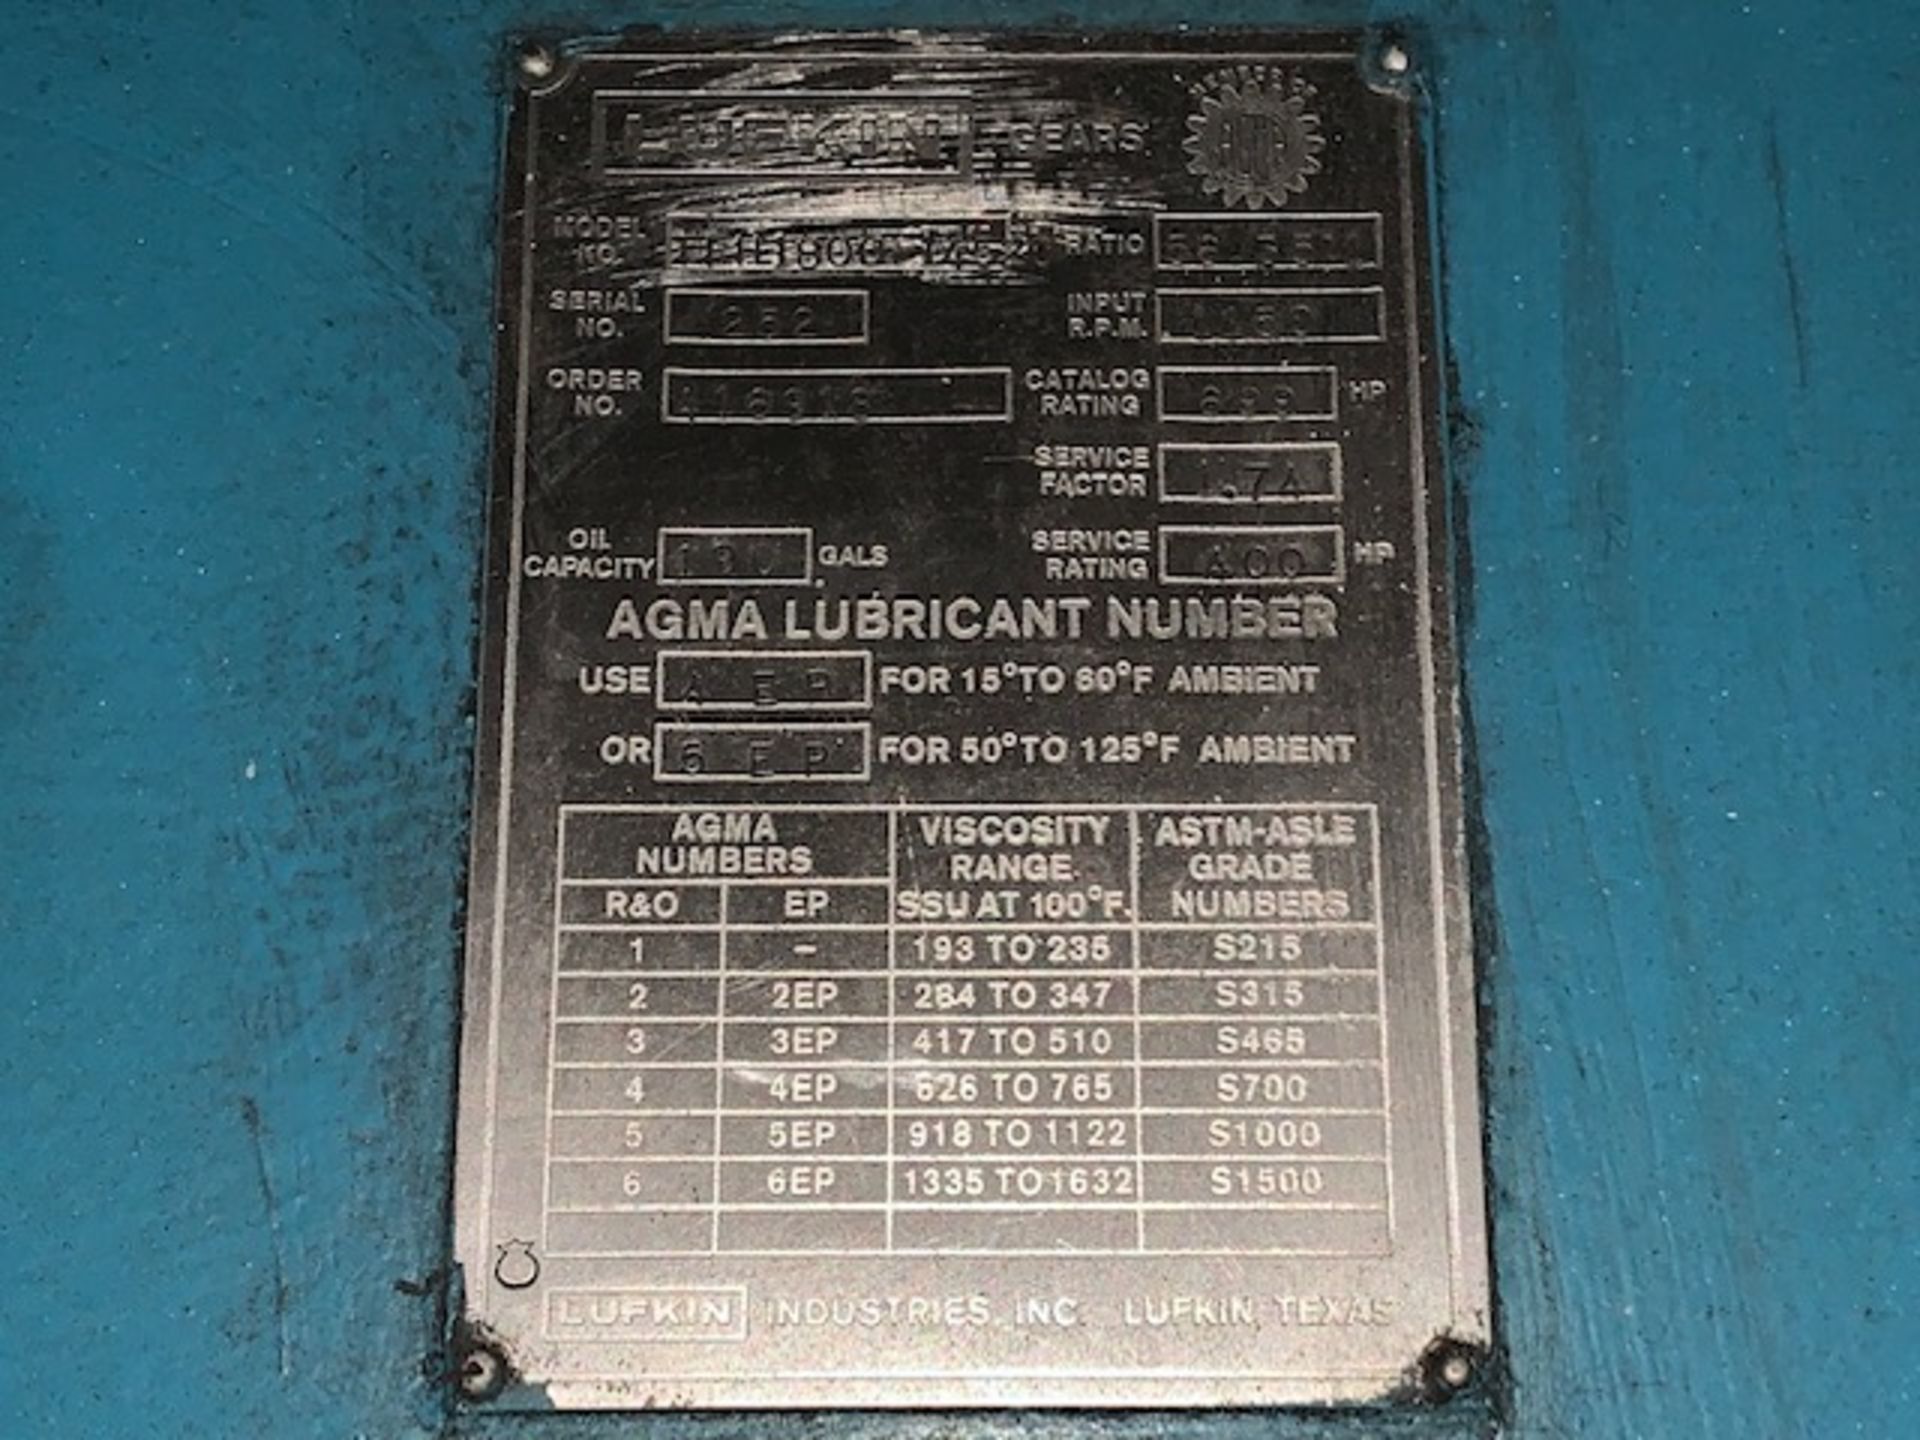 8.0" 9:1 NRM Rubber Extruder, w/ Lufkin Gear Unit, 400 HP, Date: 12-00 - Image 9 of 12